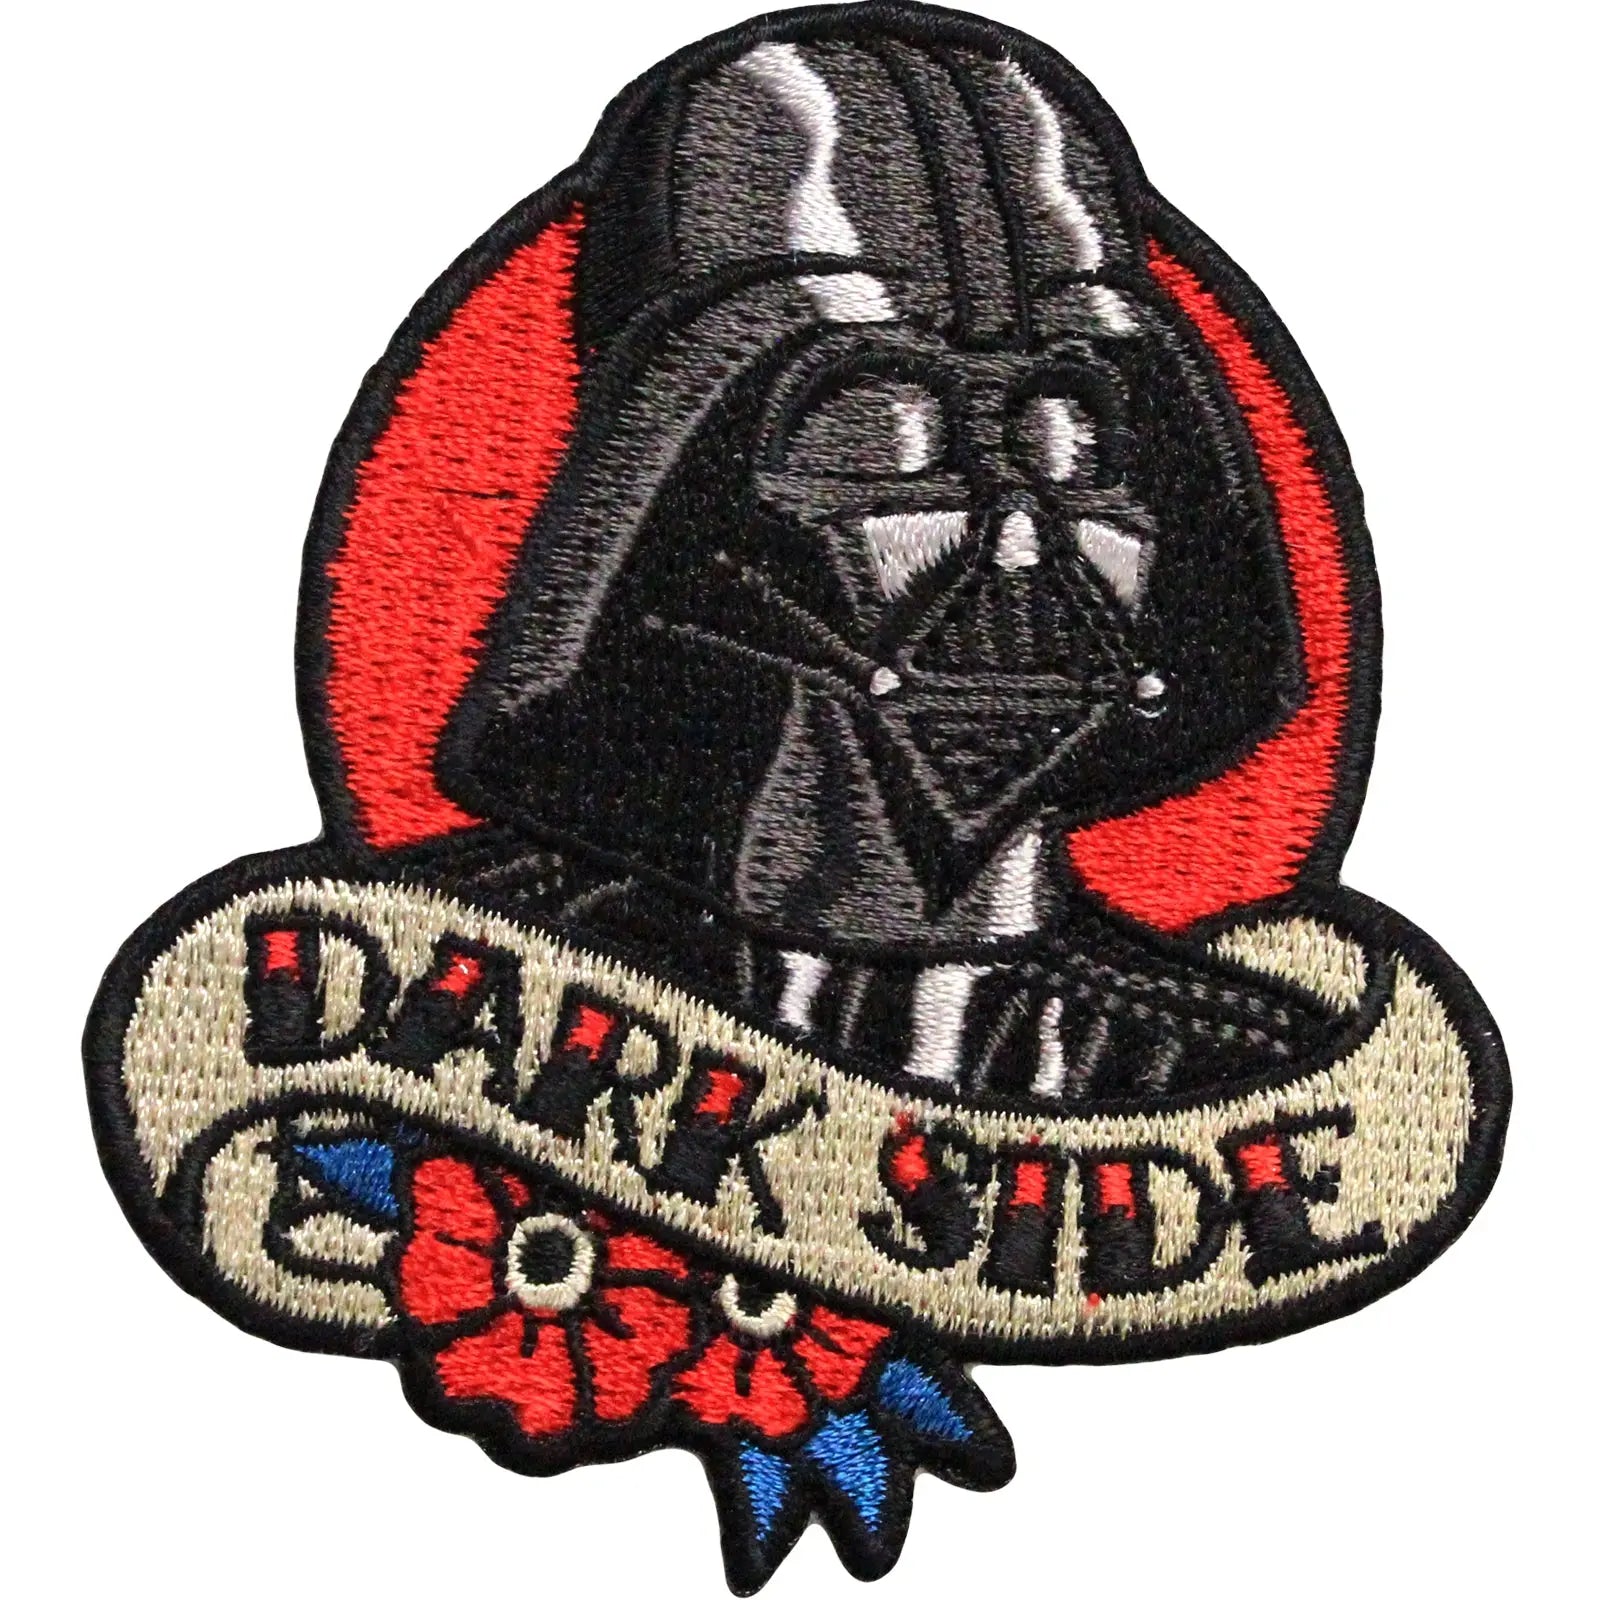 MLB Pittsburgh Pirates Custom Name Number Darth Vader Star Wars Baseball  Jersey